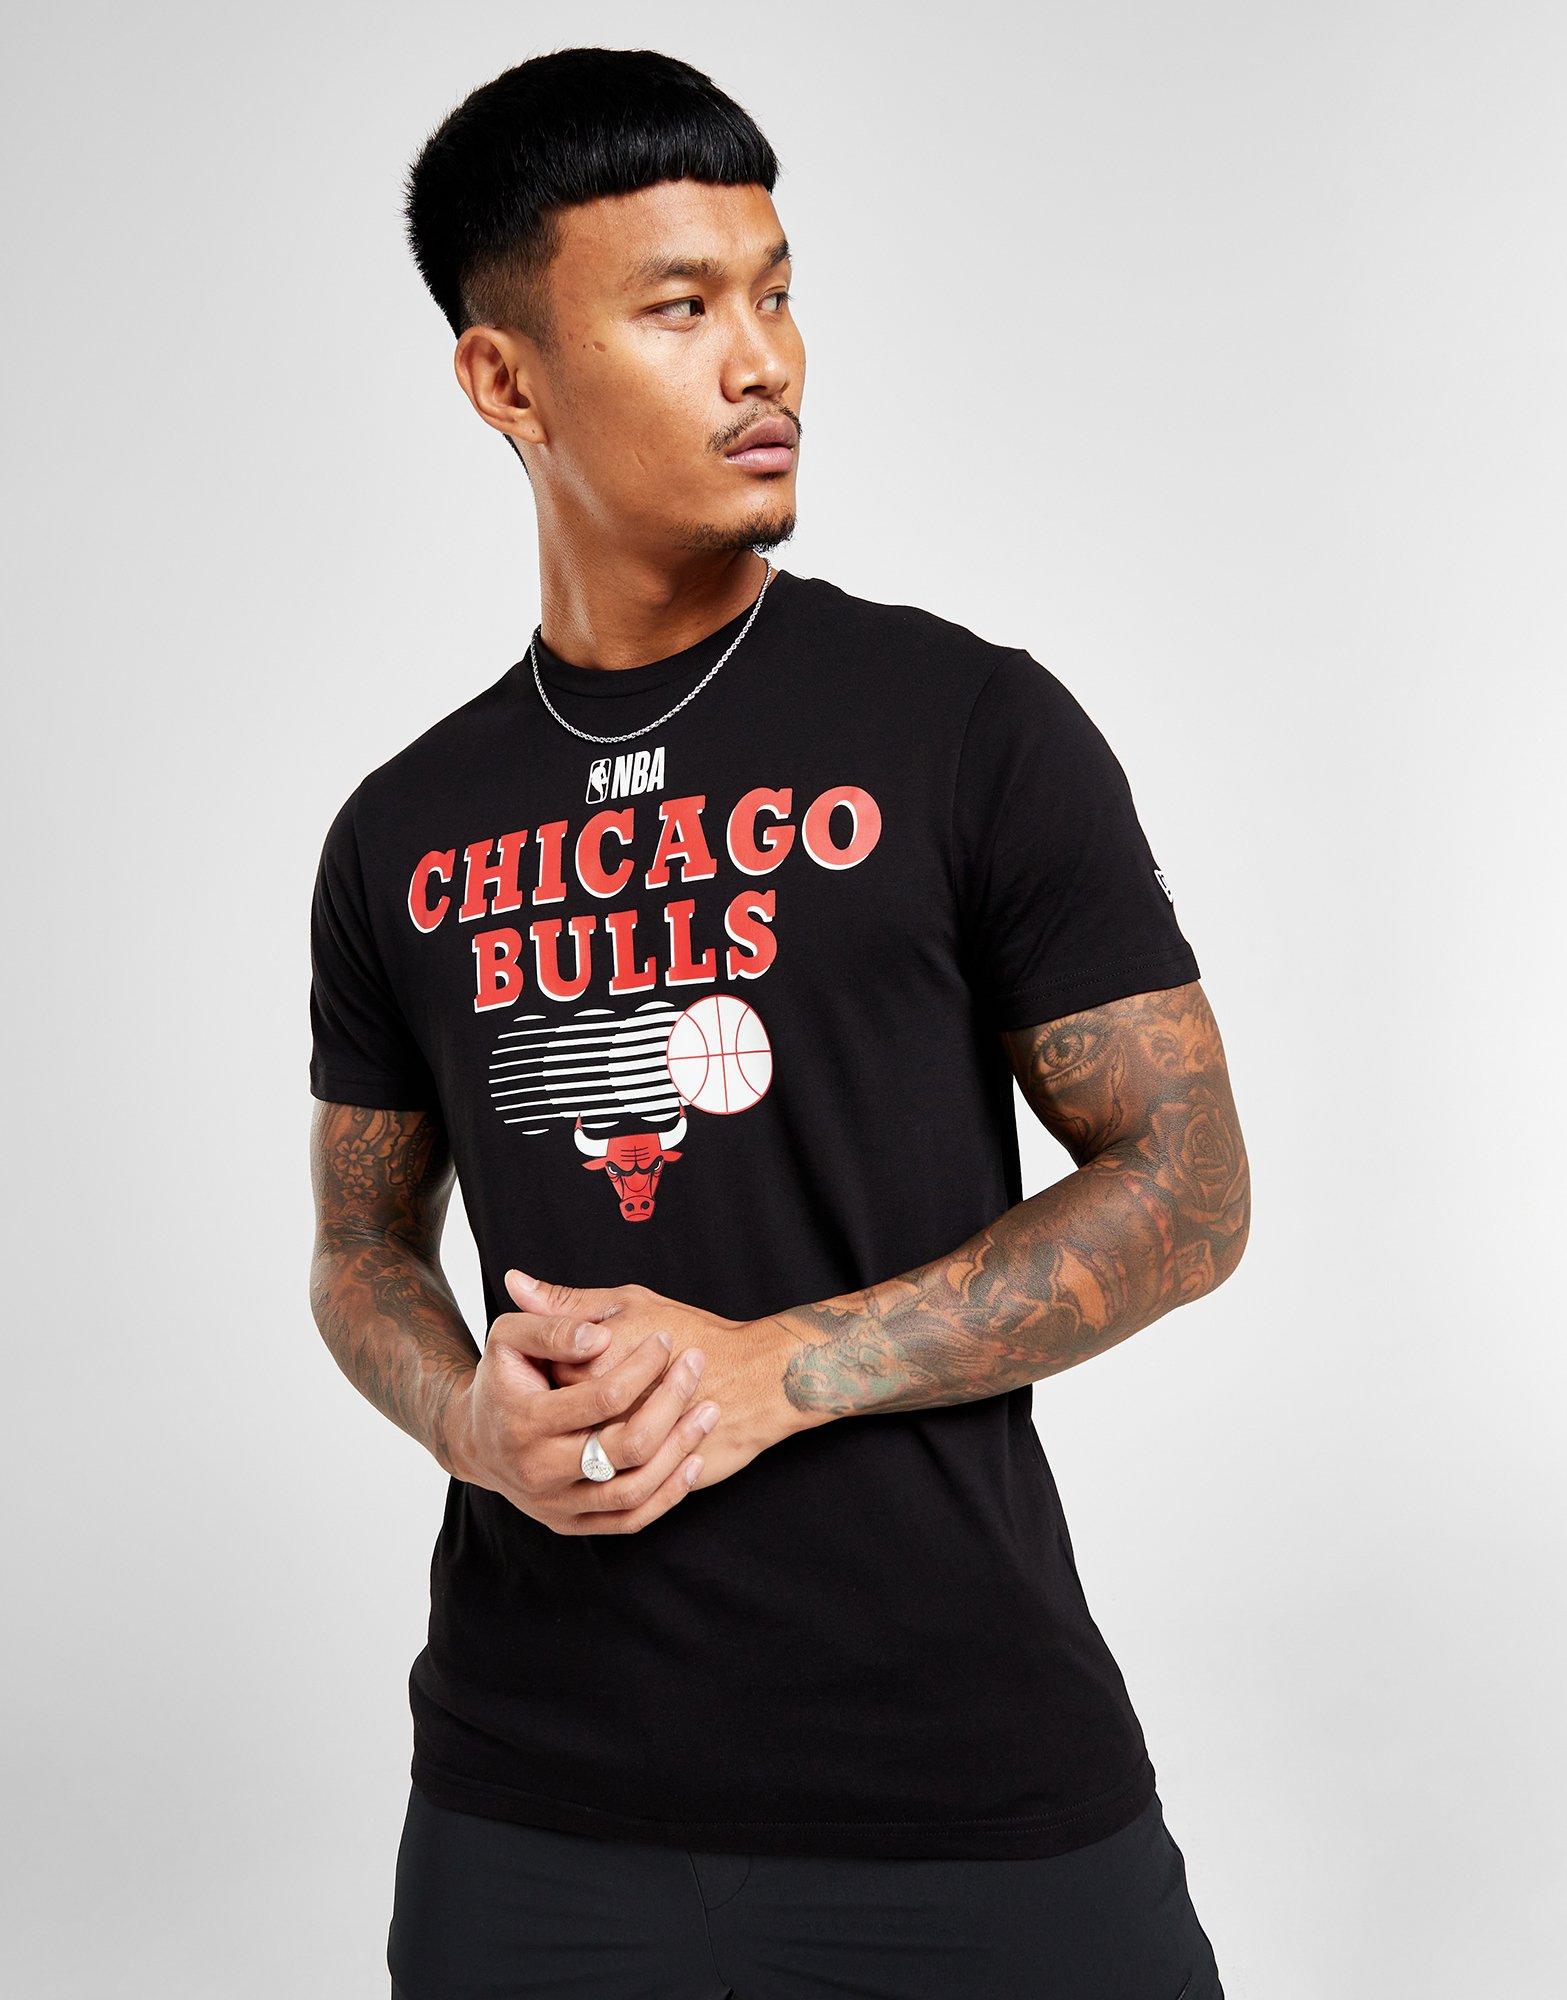 CHICAGO BULLS T-SHIRT BLACK